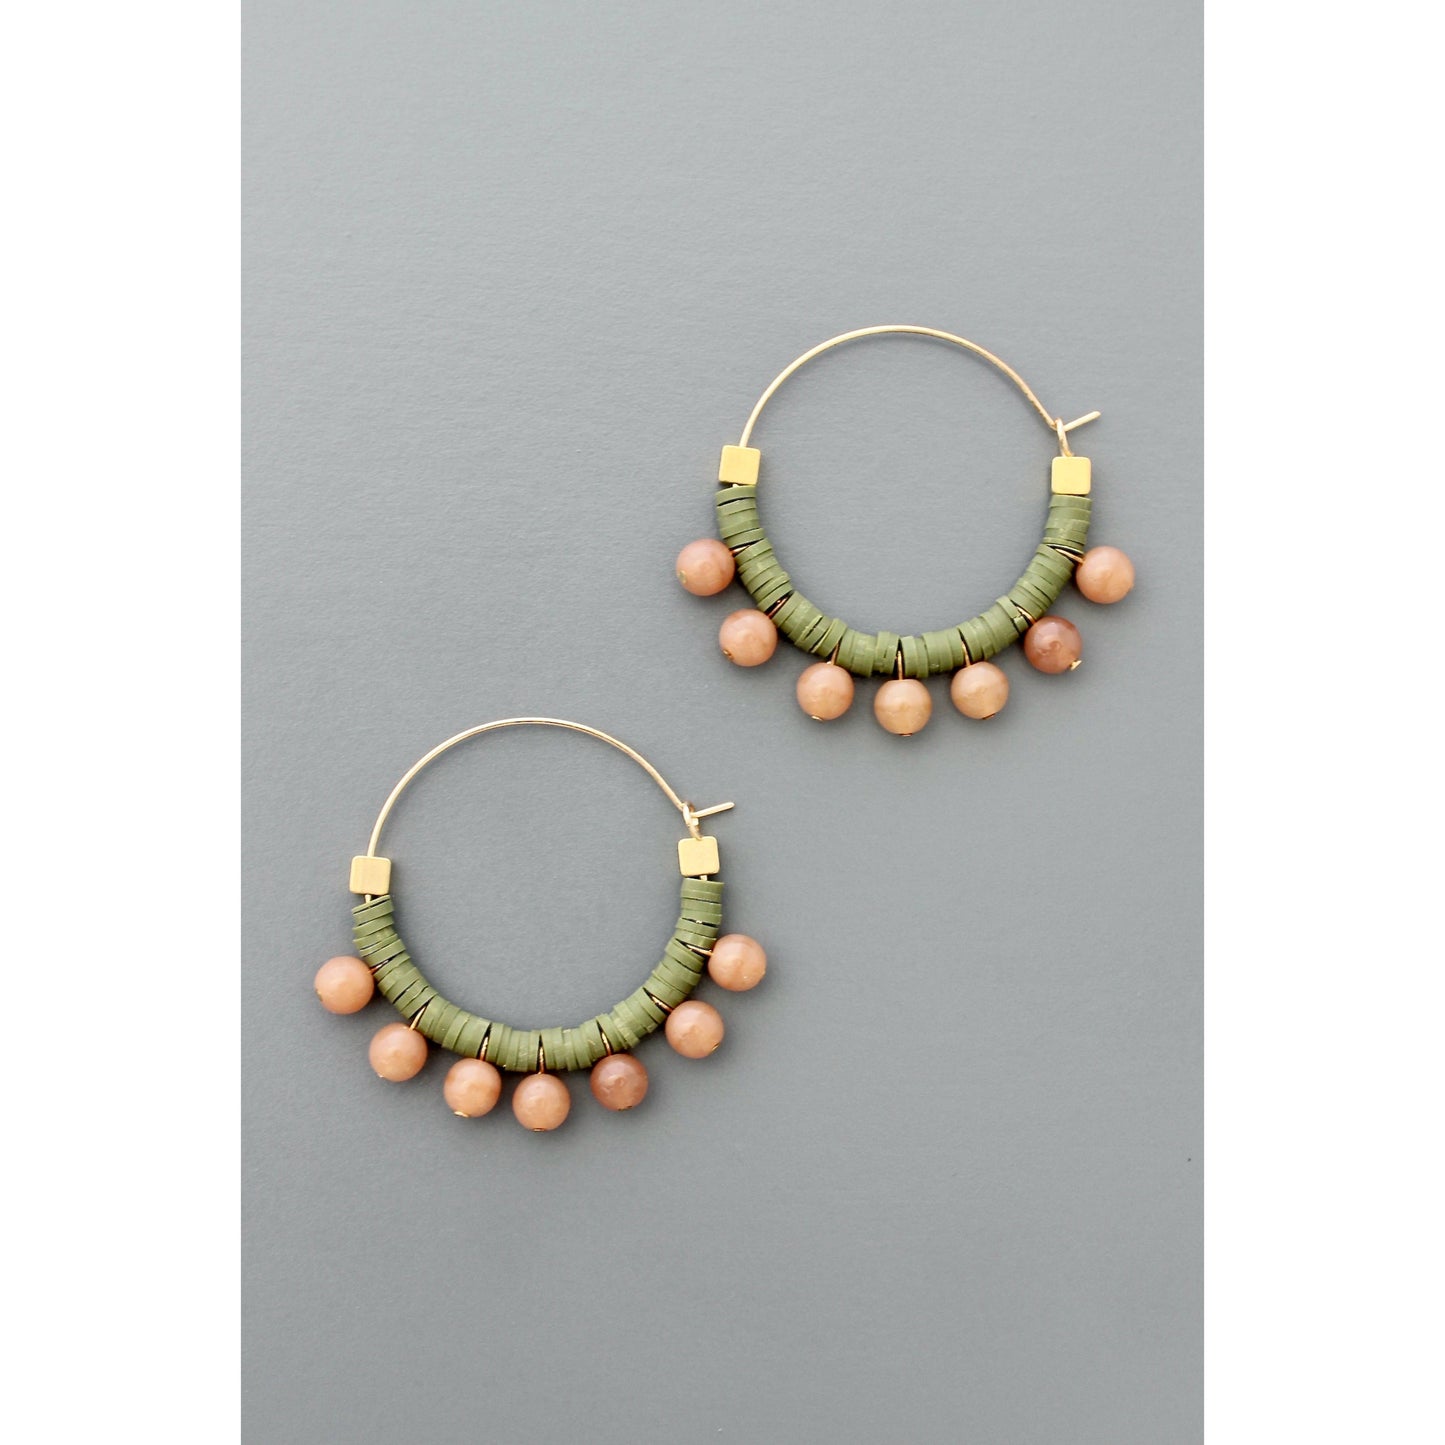 David Aubrey Jewelry - FERE20 Green and peach hoop earrings